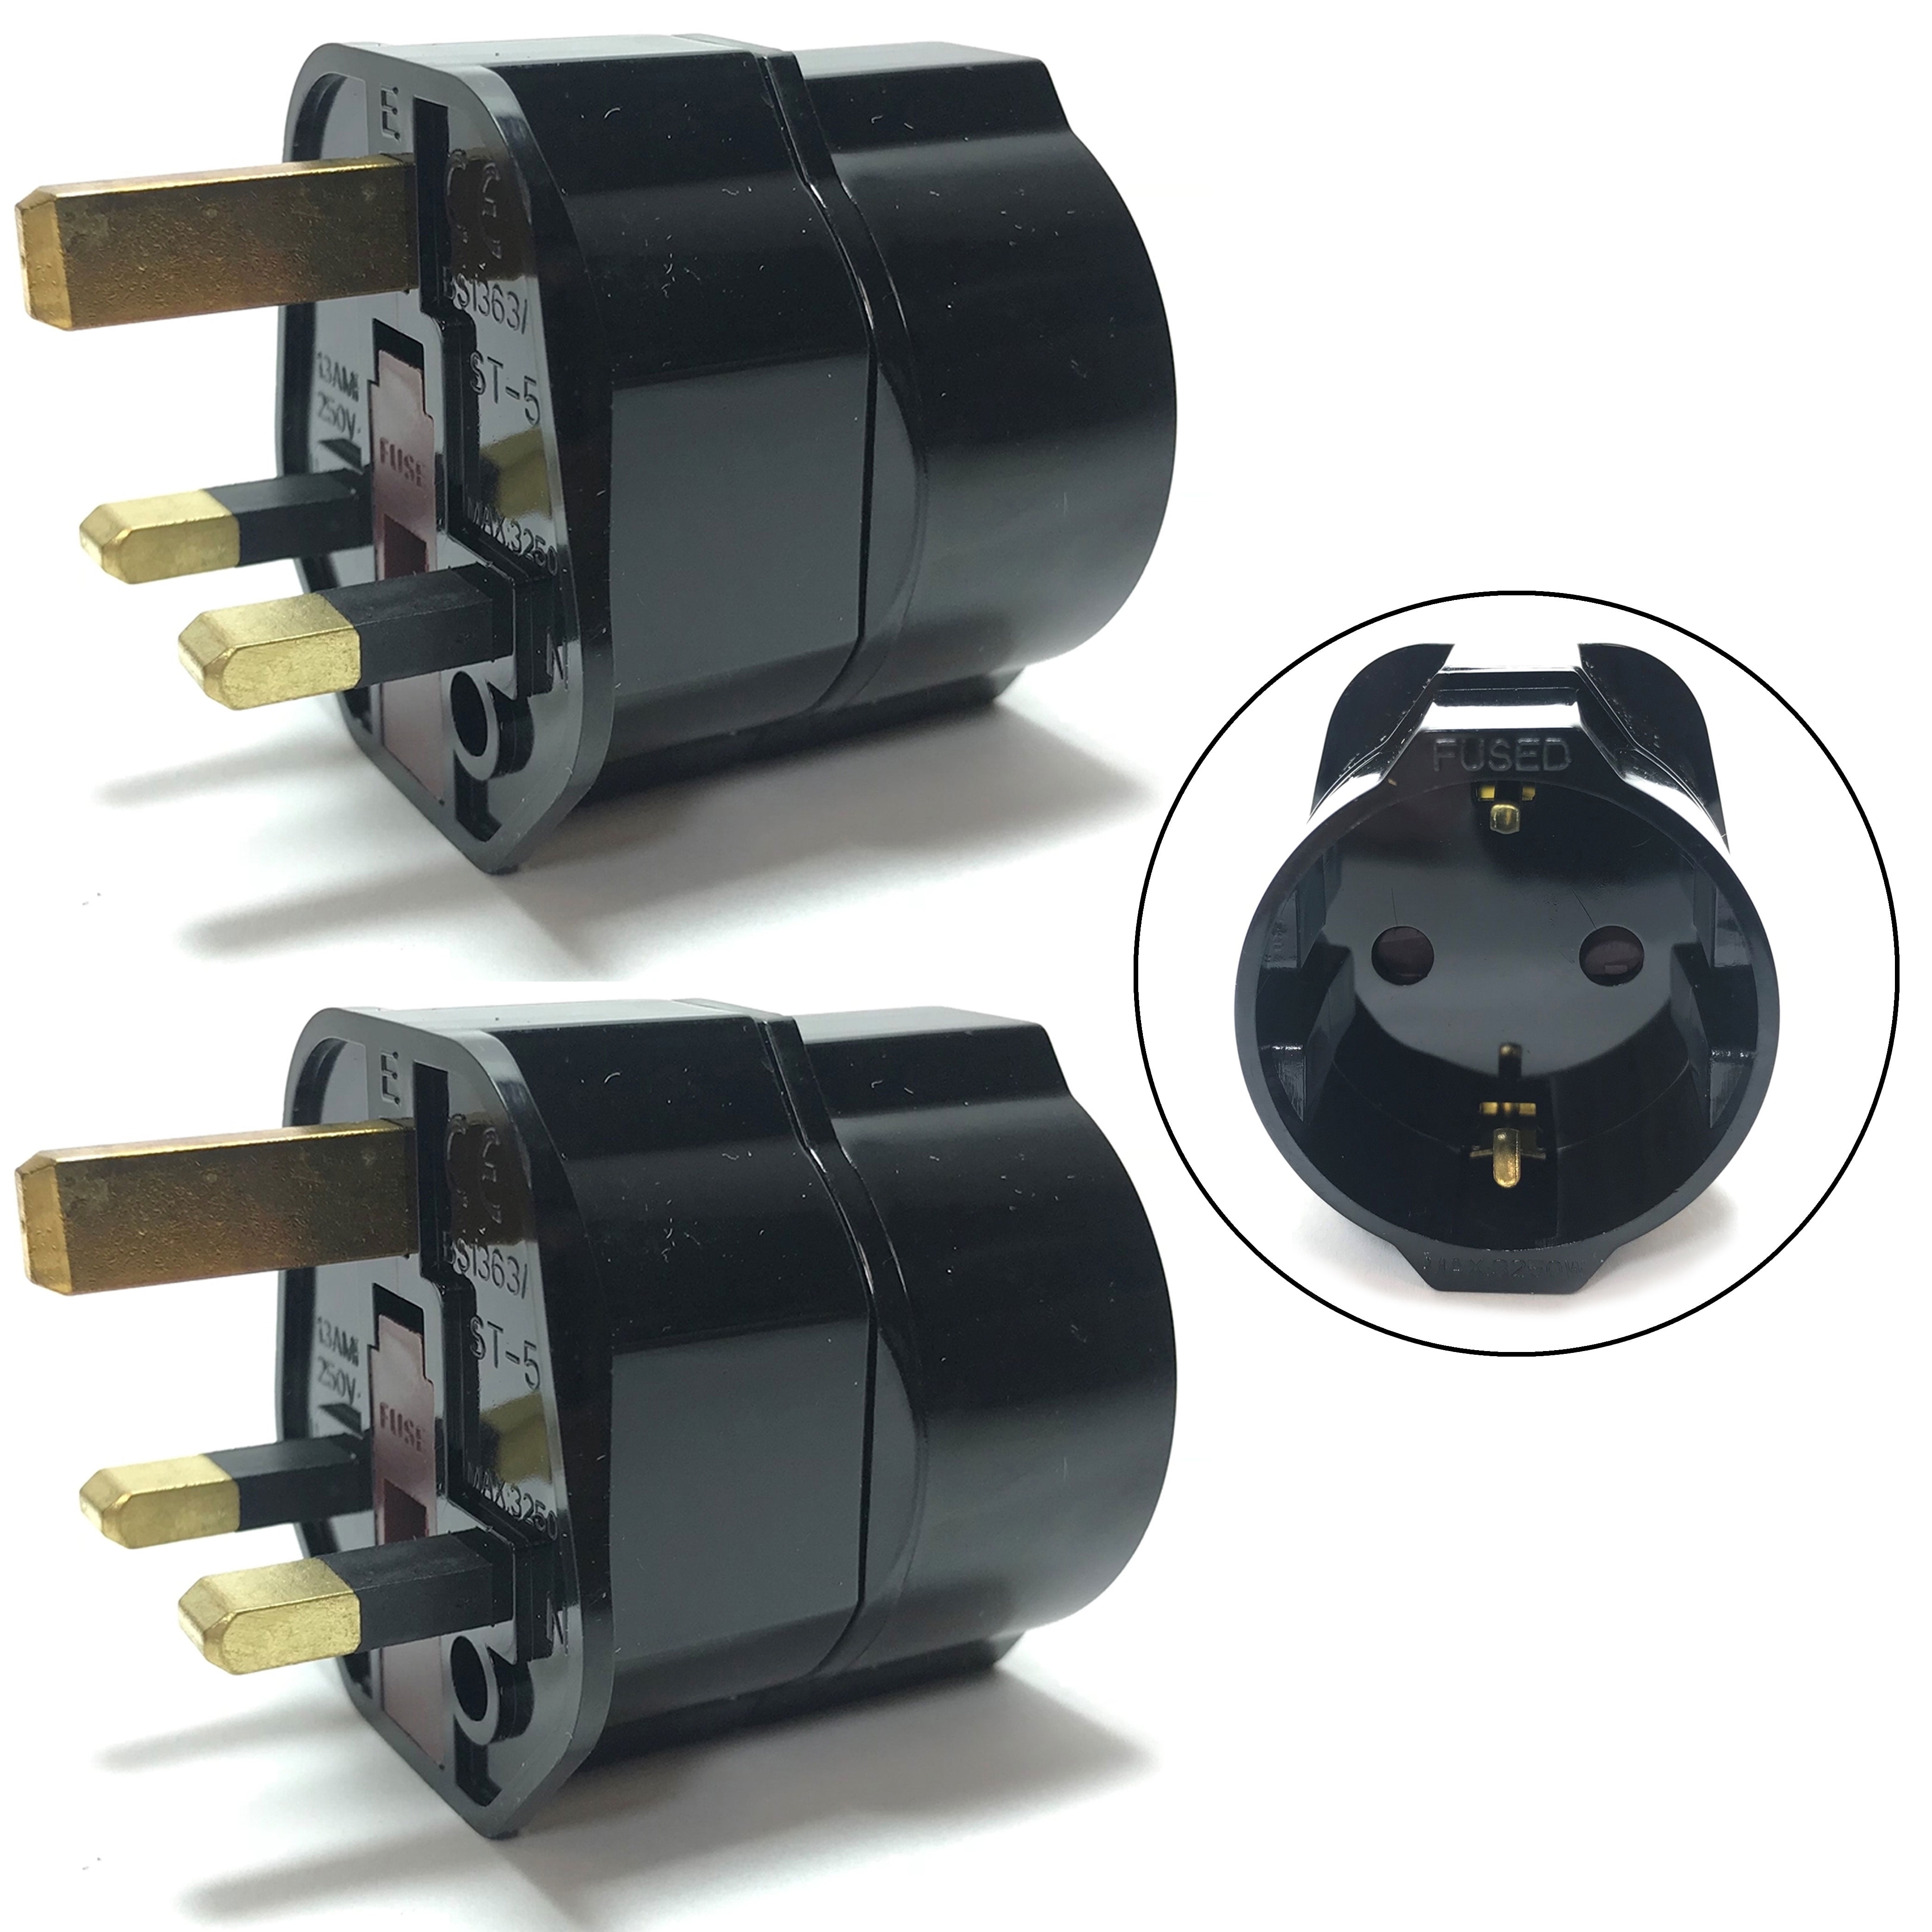 European 2 Pin to UK 3 Pin Plug Adaptor Euro EU Converter Mains Travel Adapter 